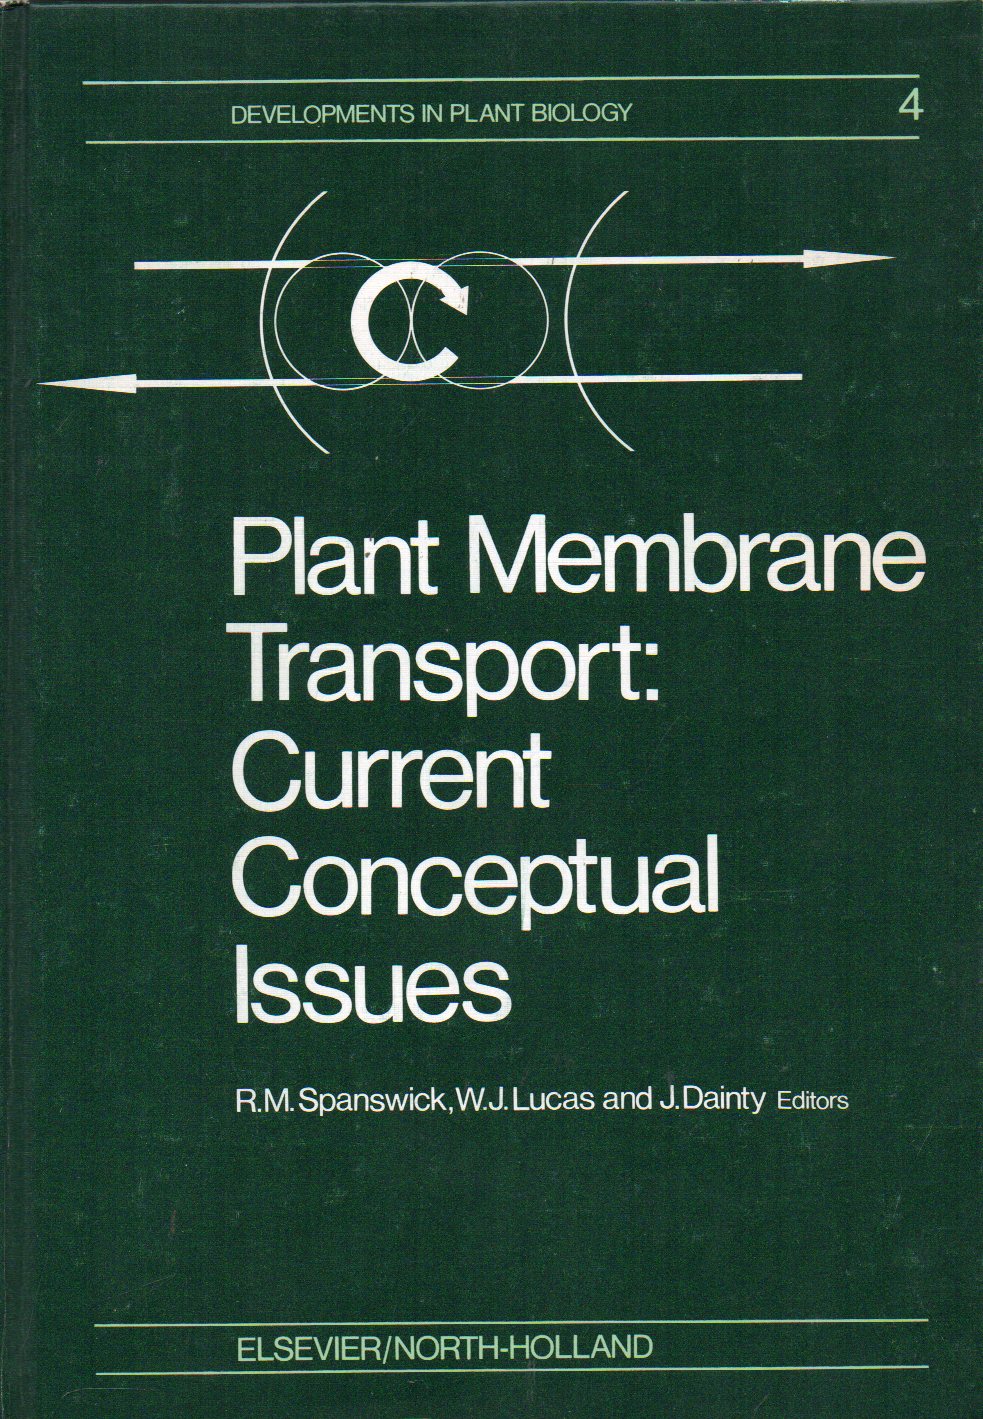 Plant Membrane Transport: 1st: Current Conceptual Issues - International Workshop Proceedings (Developments in plant biology)